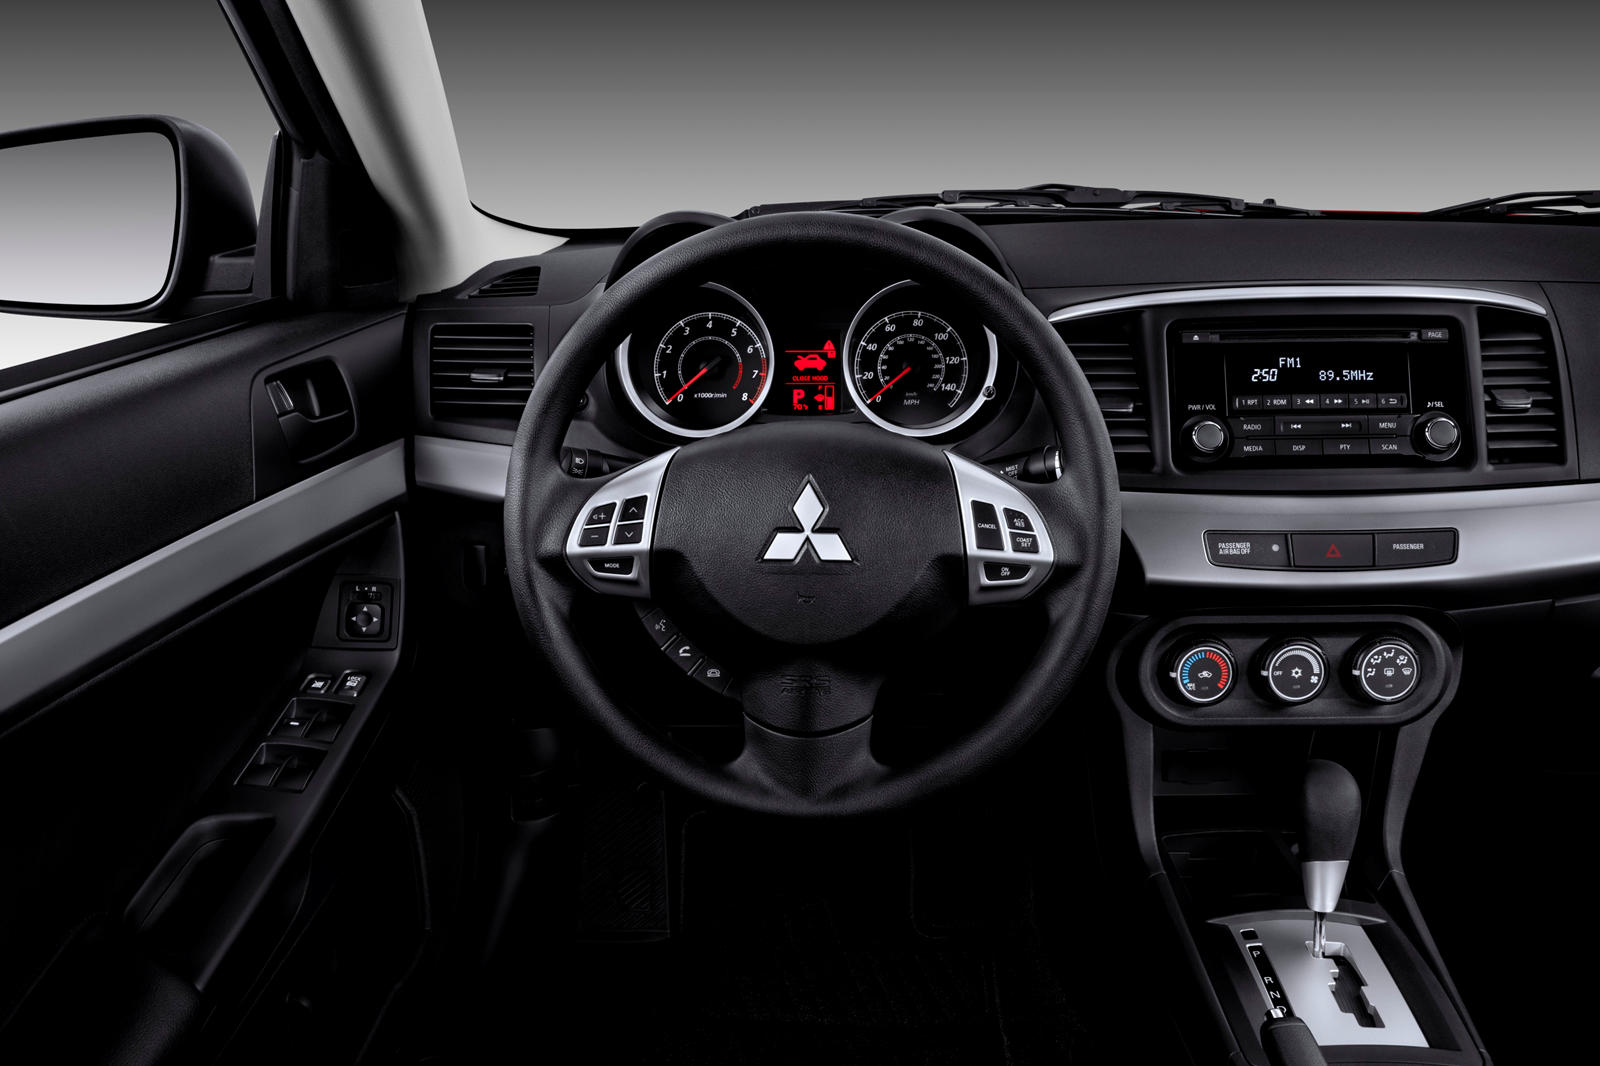 2015 Mitsubishi Lancer Sedan Interior Photos | CarBuzz